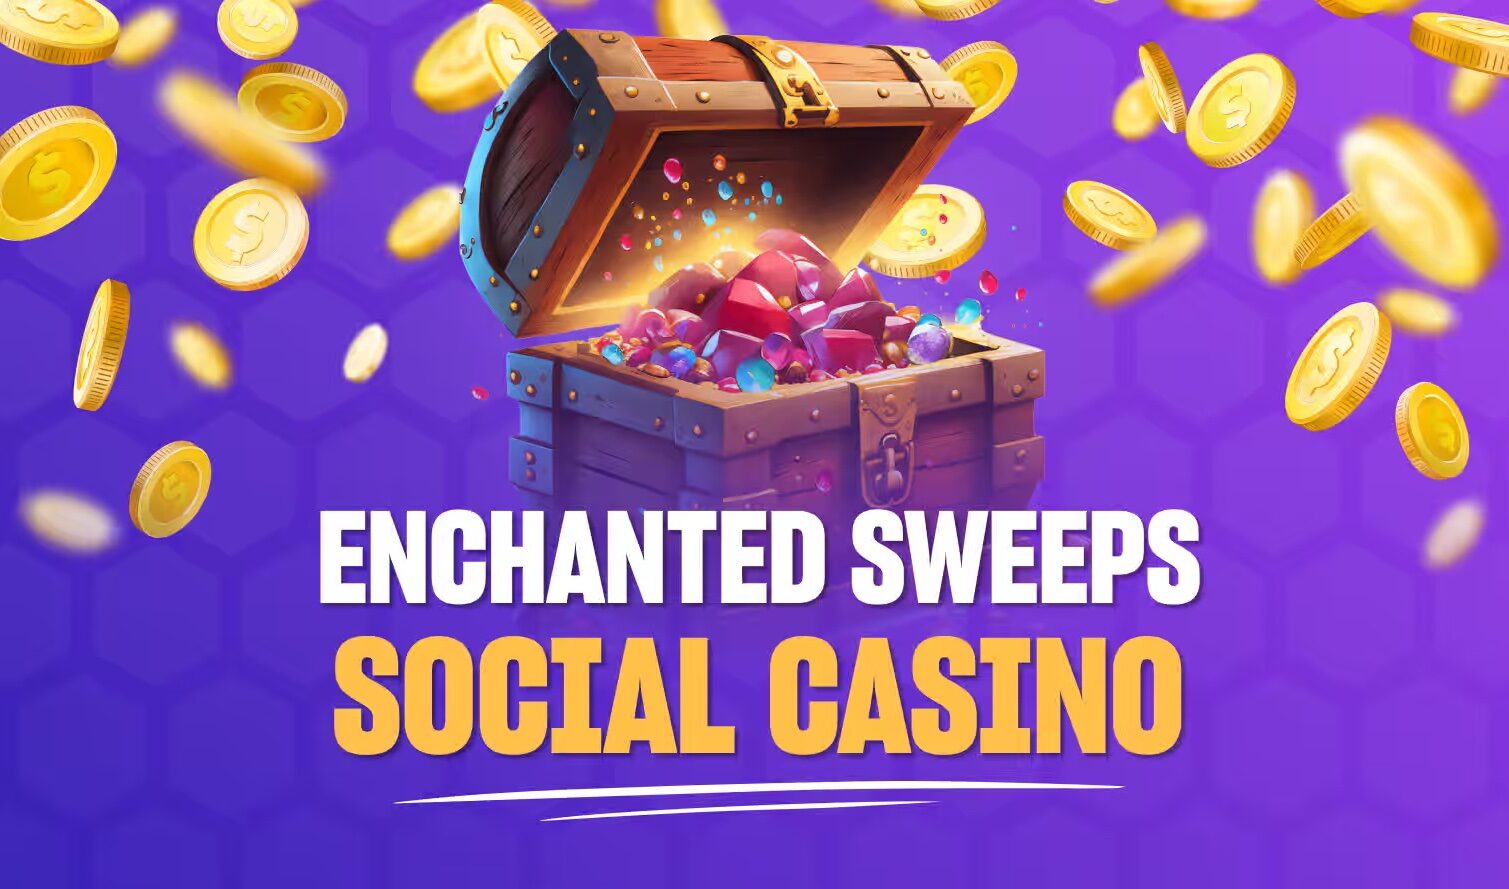 Enchanted-sweeps-social-casino